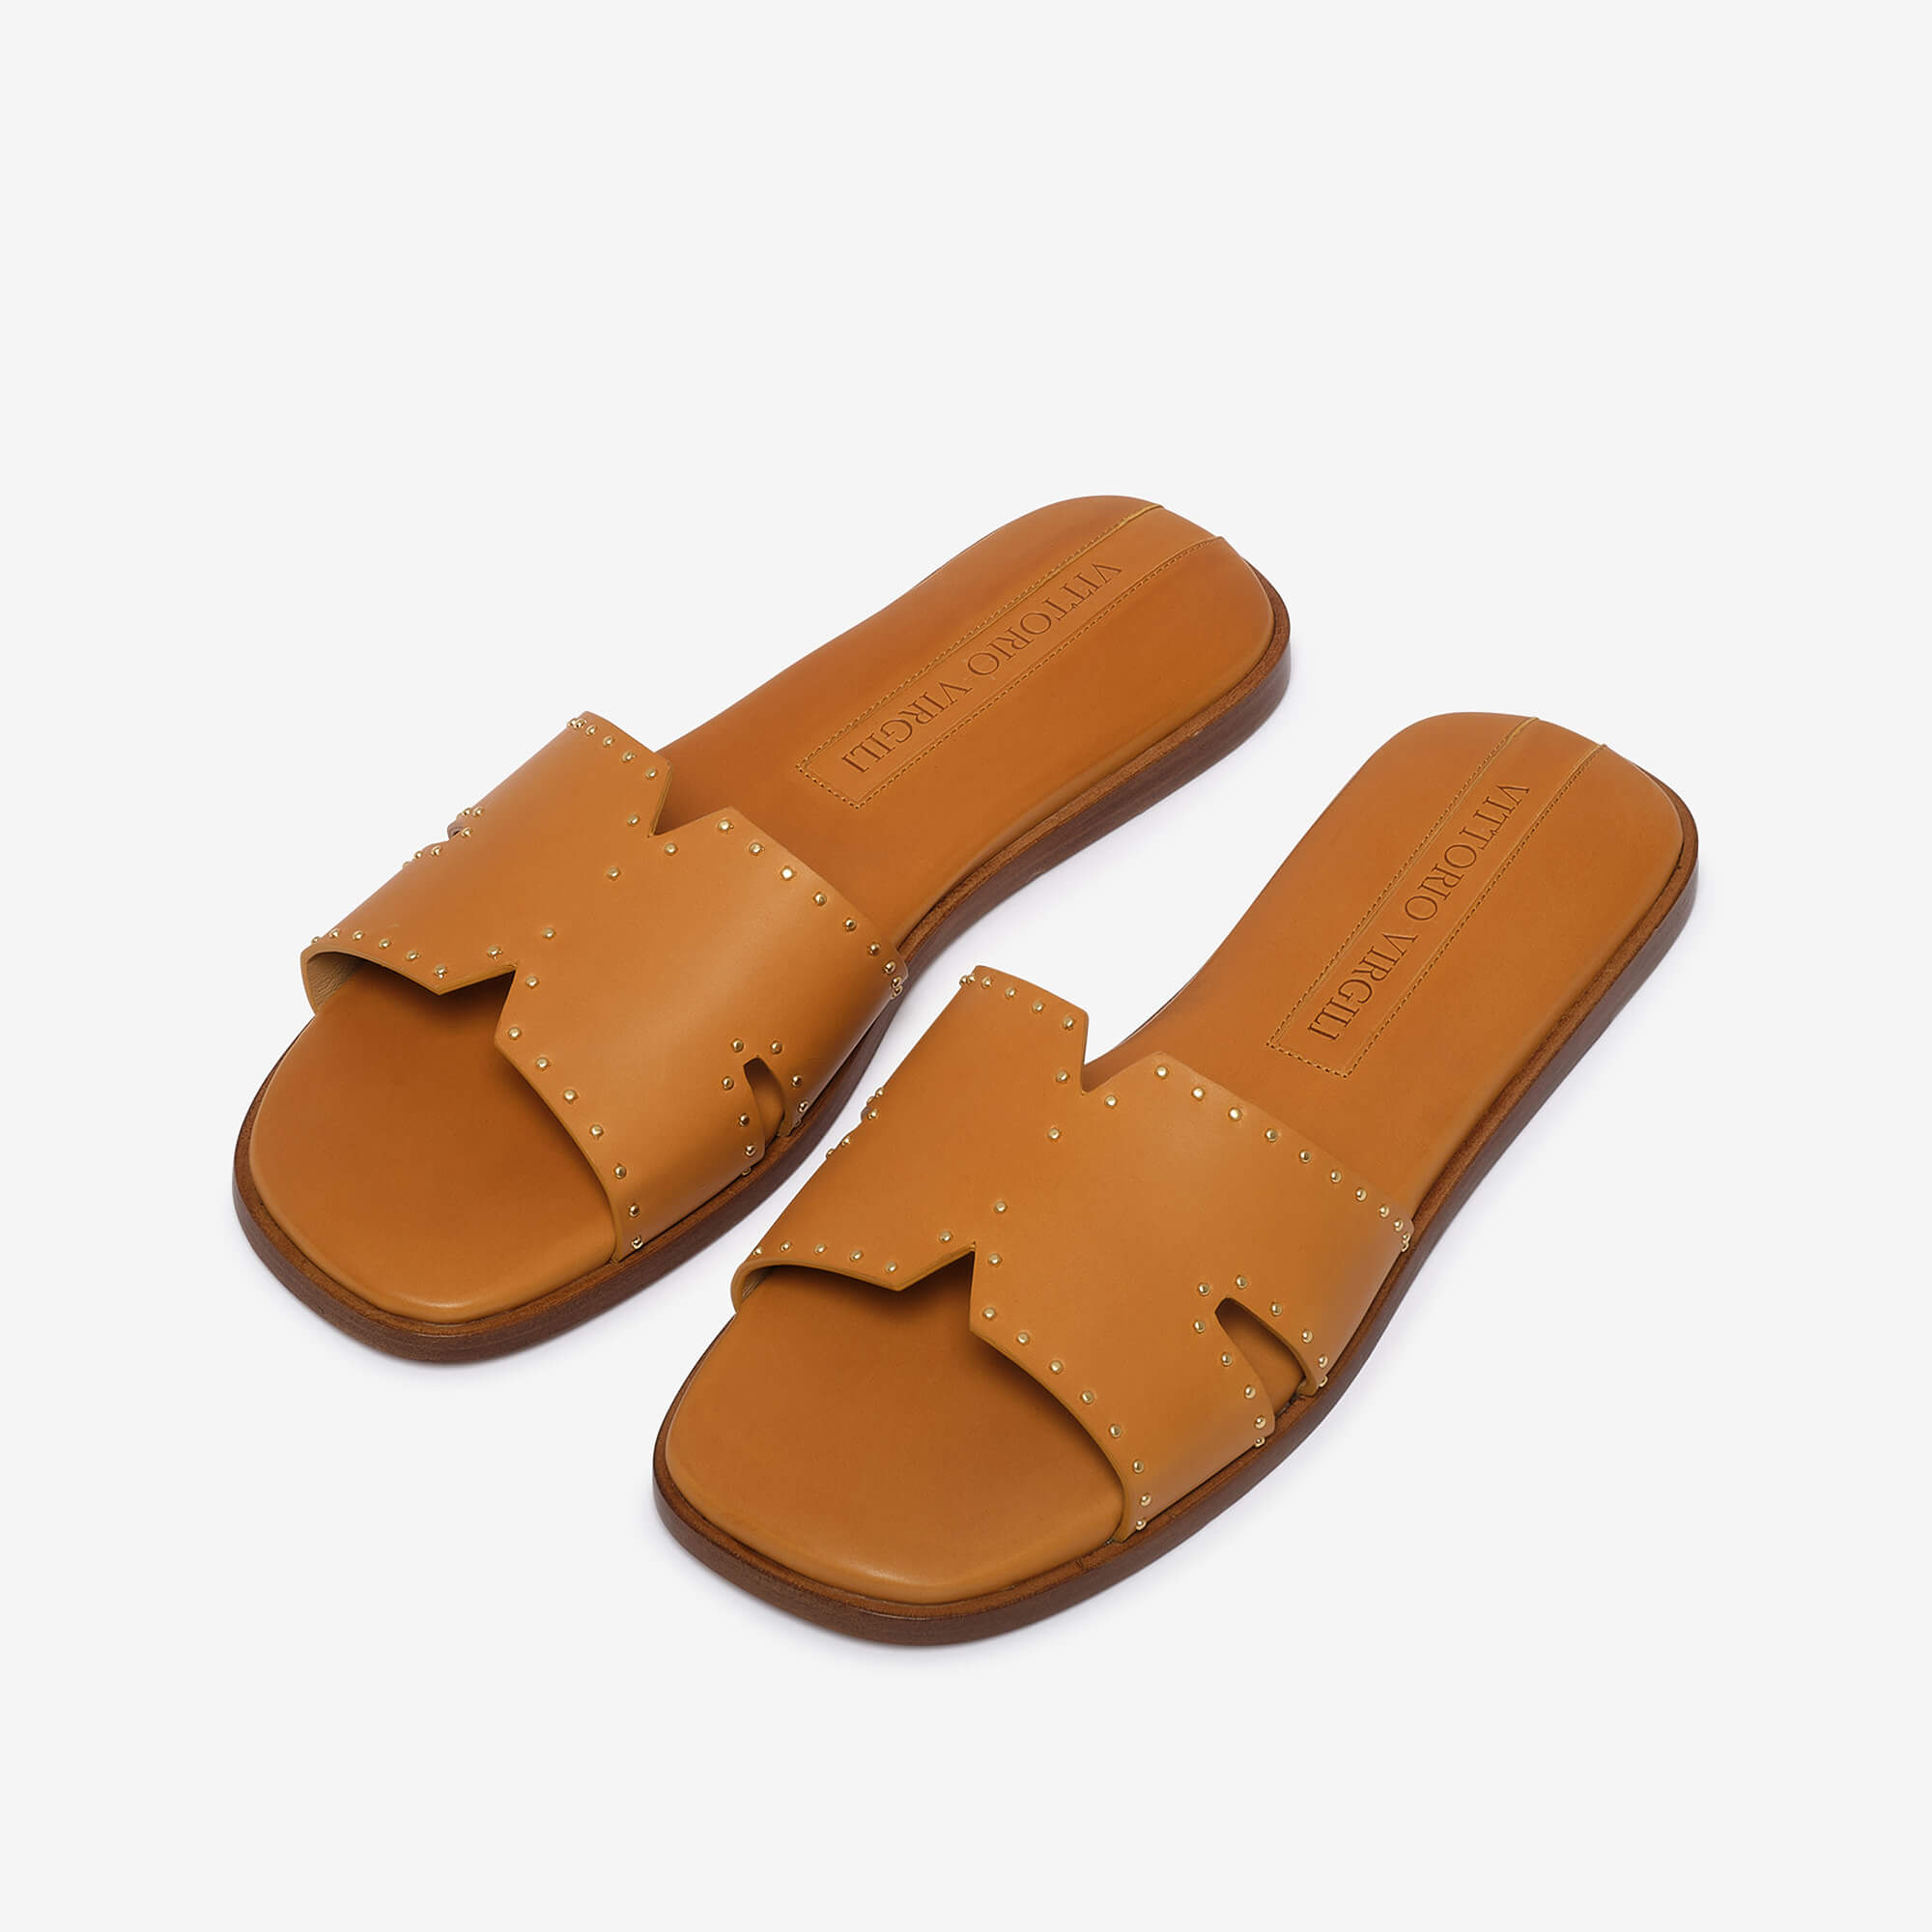 Priscilla | Women's leather sandal